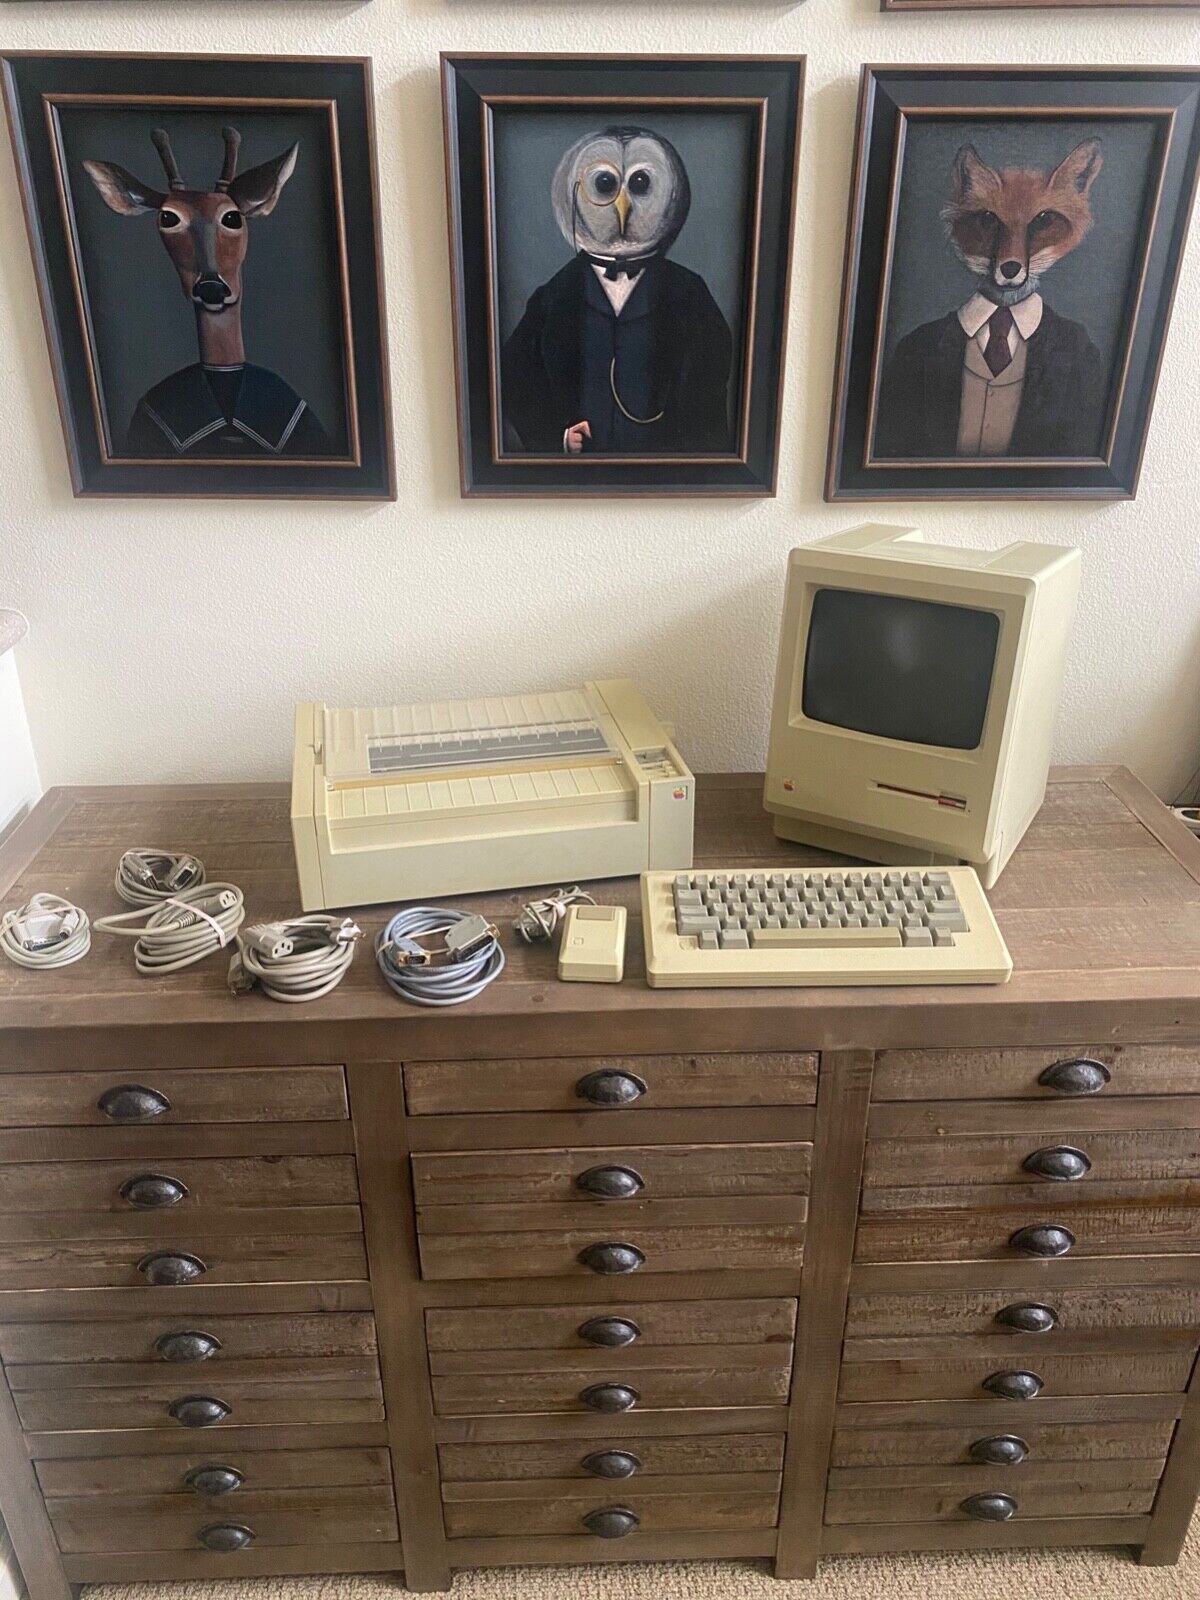 Apple Macintosh 128K M0001 Computer (1984)